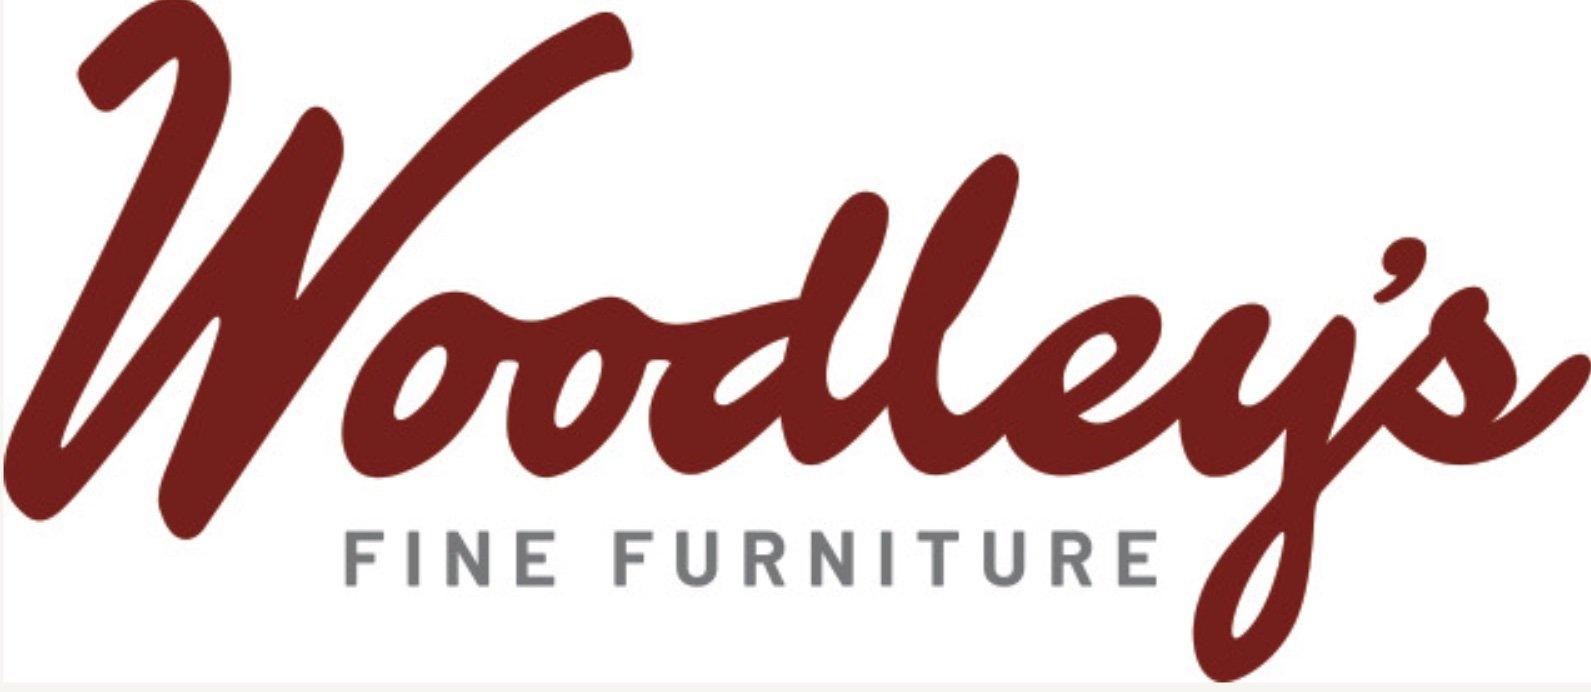 Woodley's logo.png